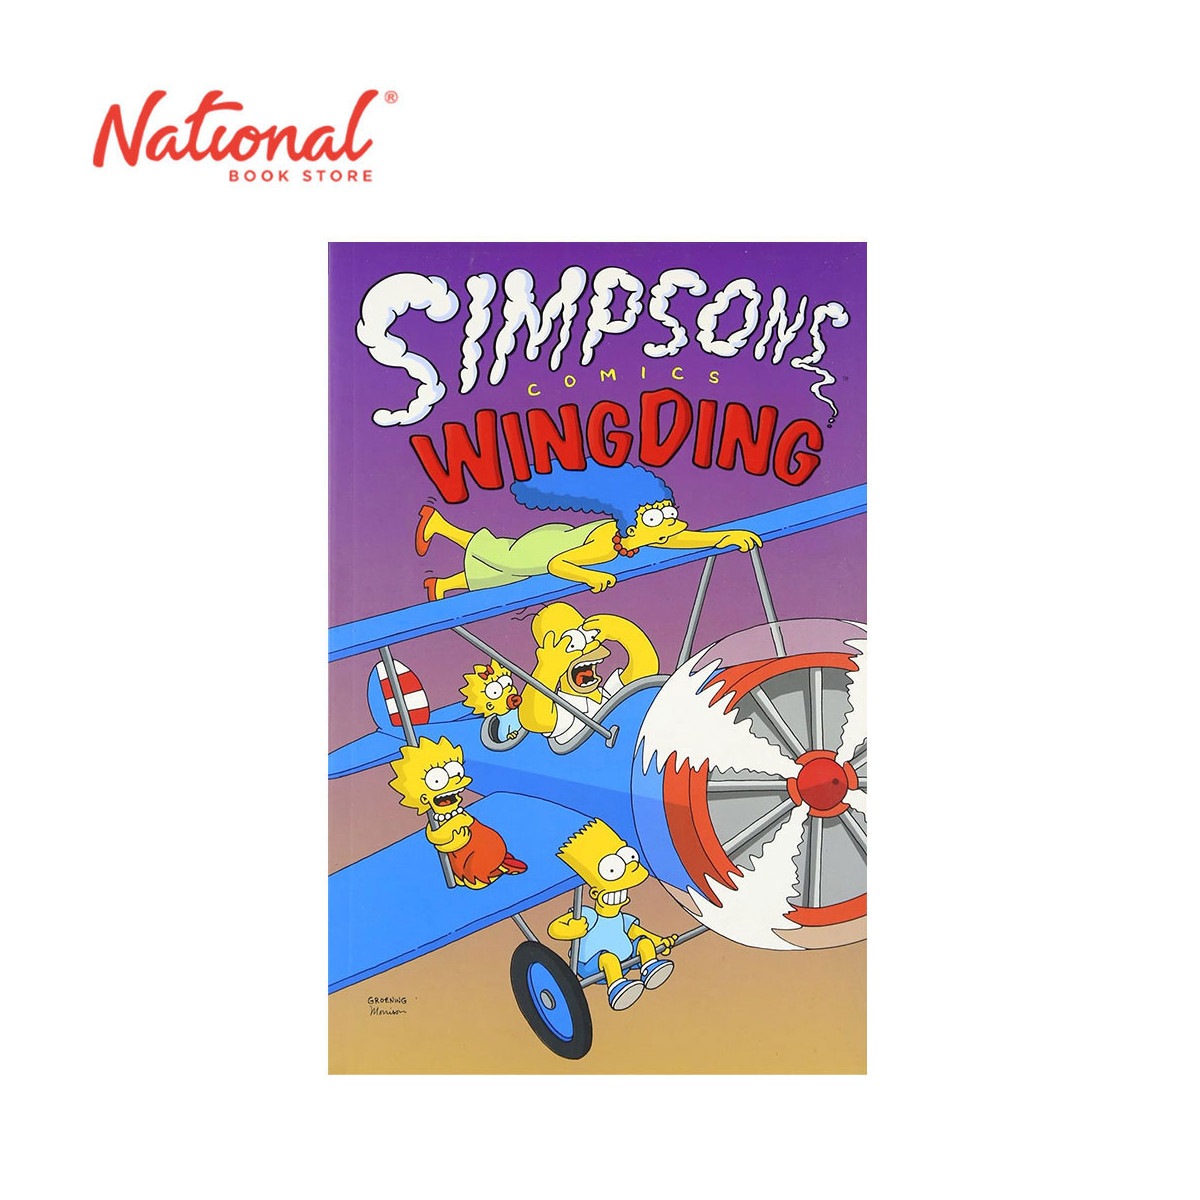 Simpsons Comics Wingding by Matt Groening - Trade Paperback - Graphic Novels